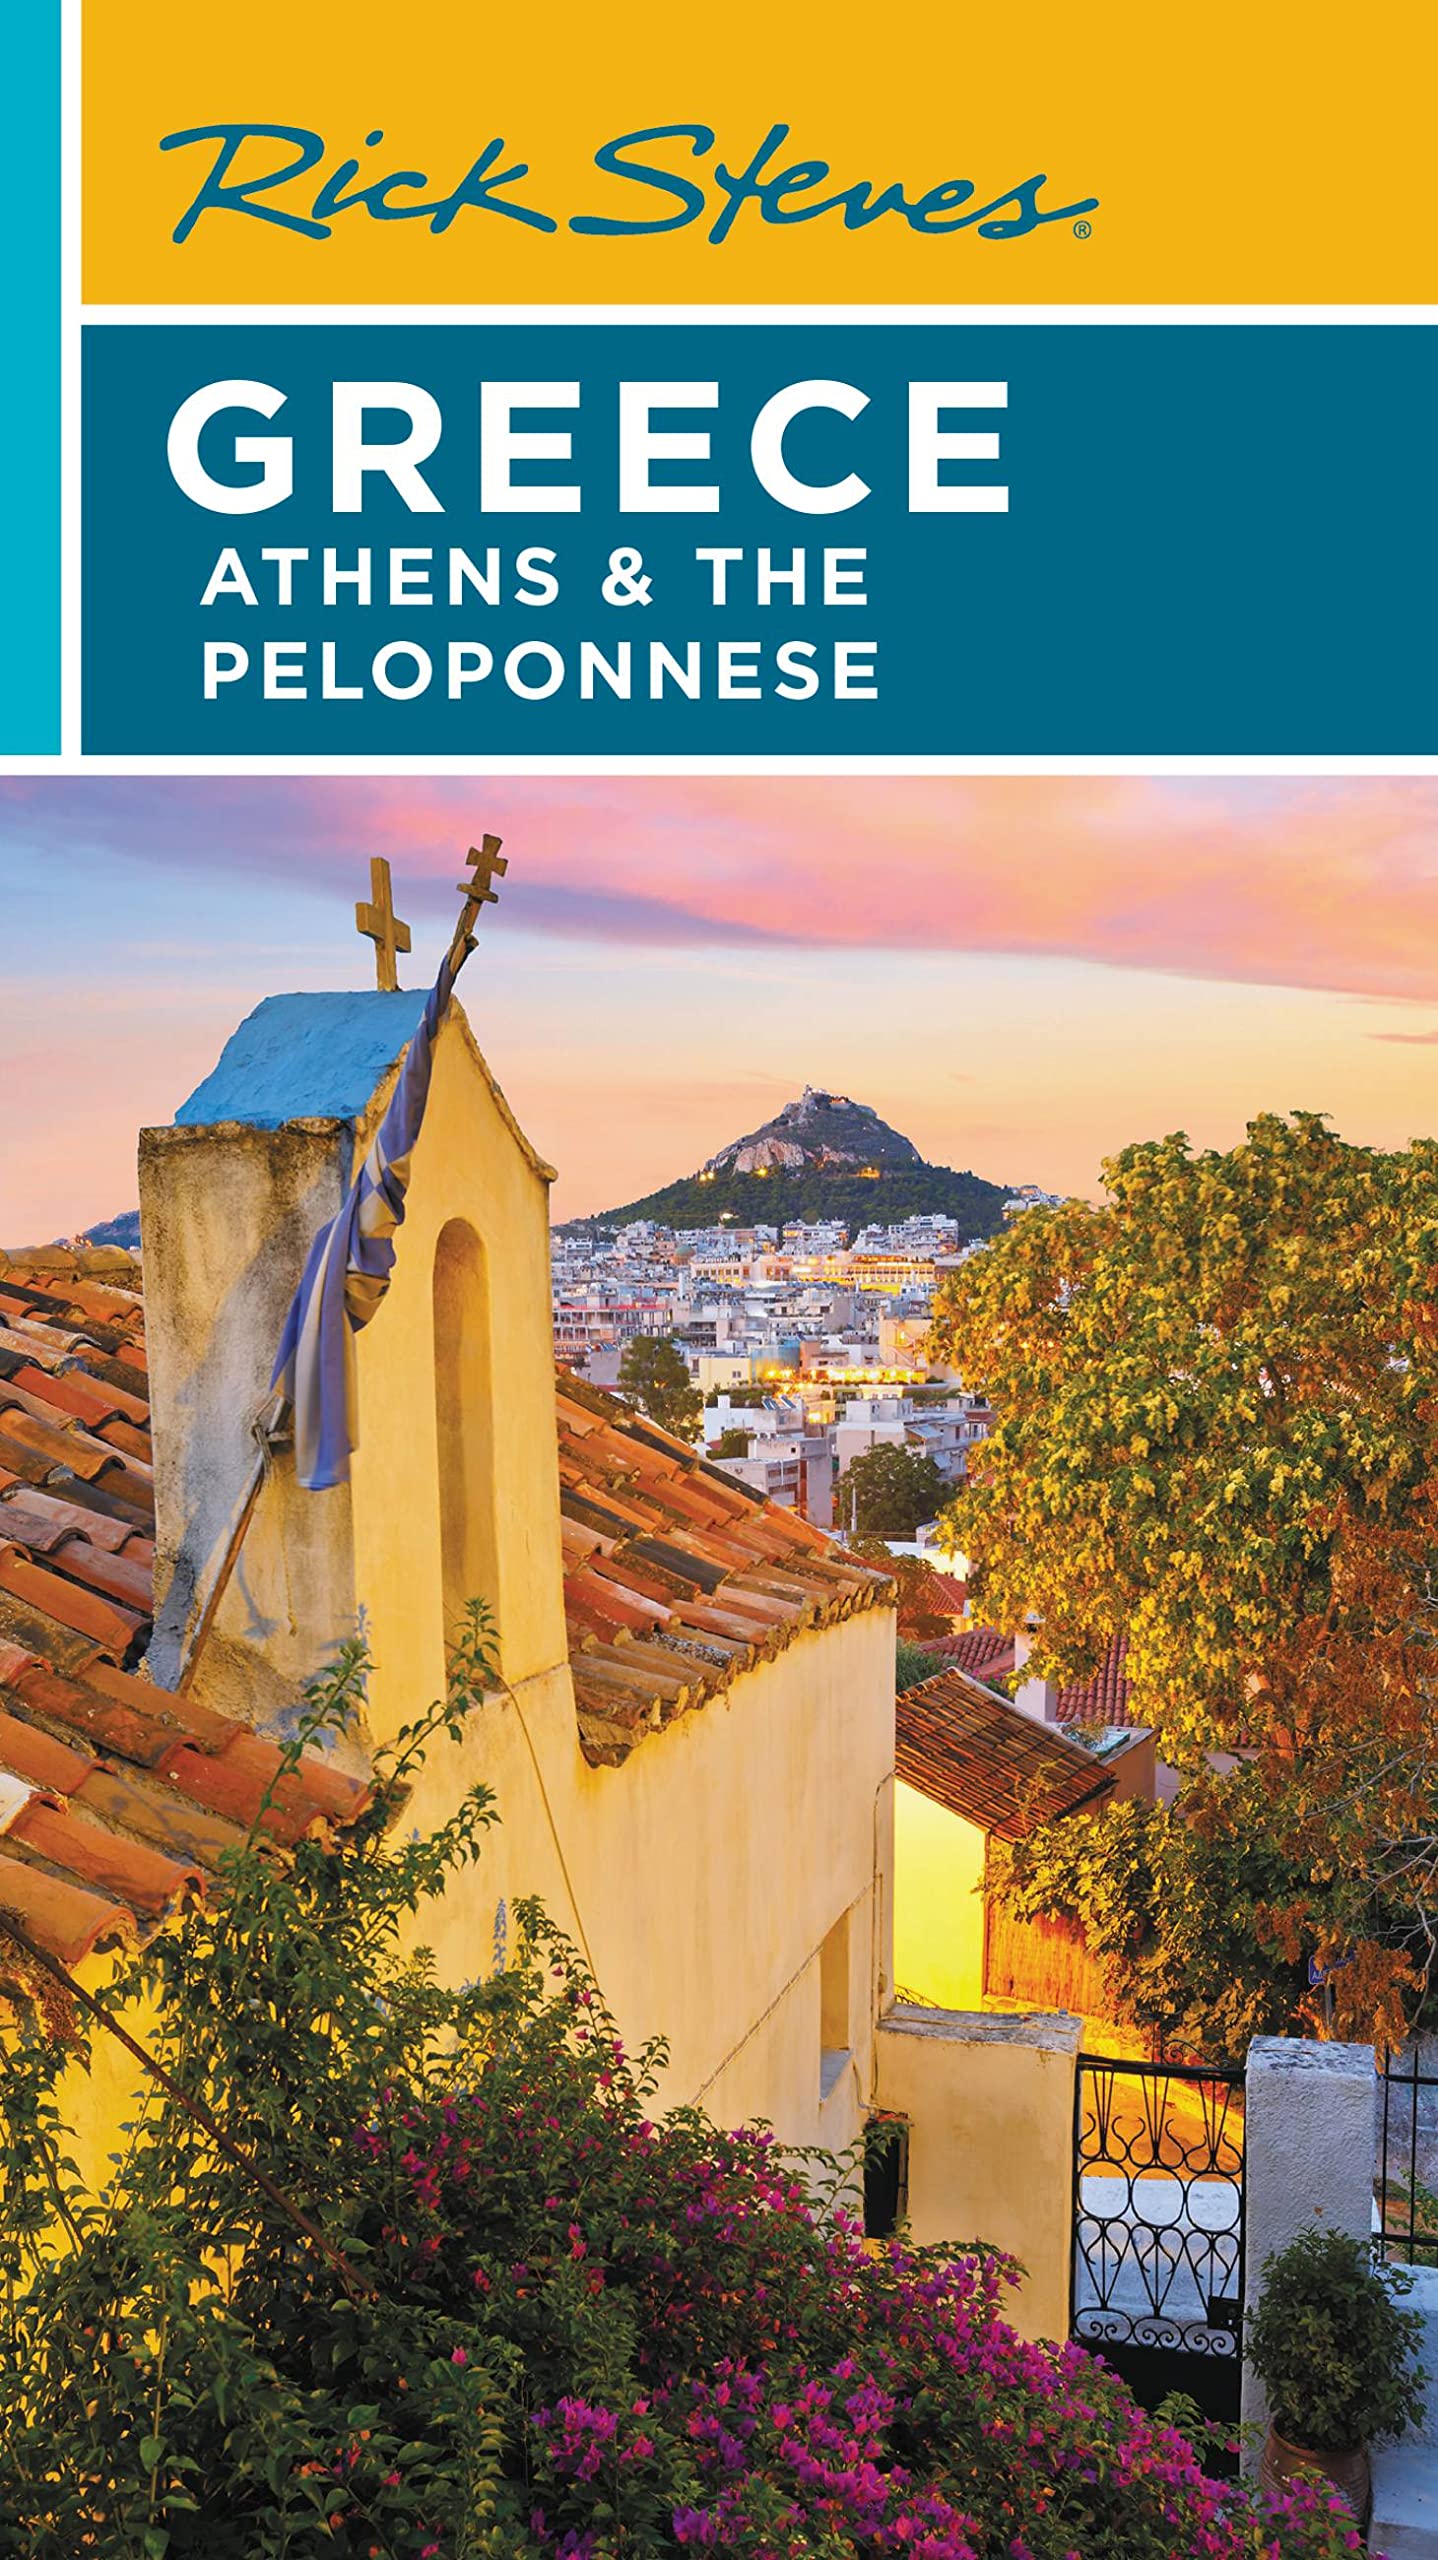 Rick Steves Greece: Athens & the Peloponnese by Steves, Rick